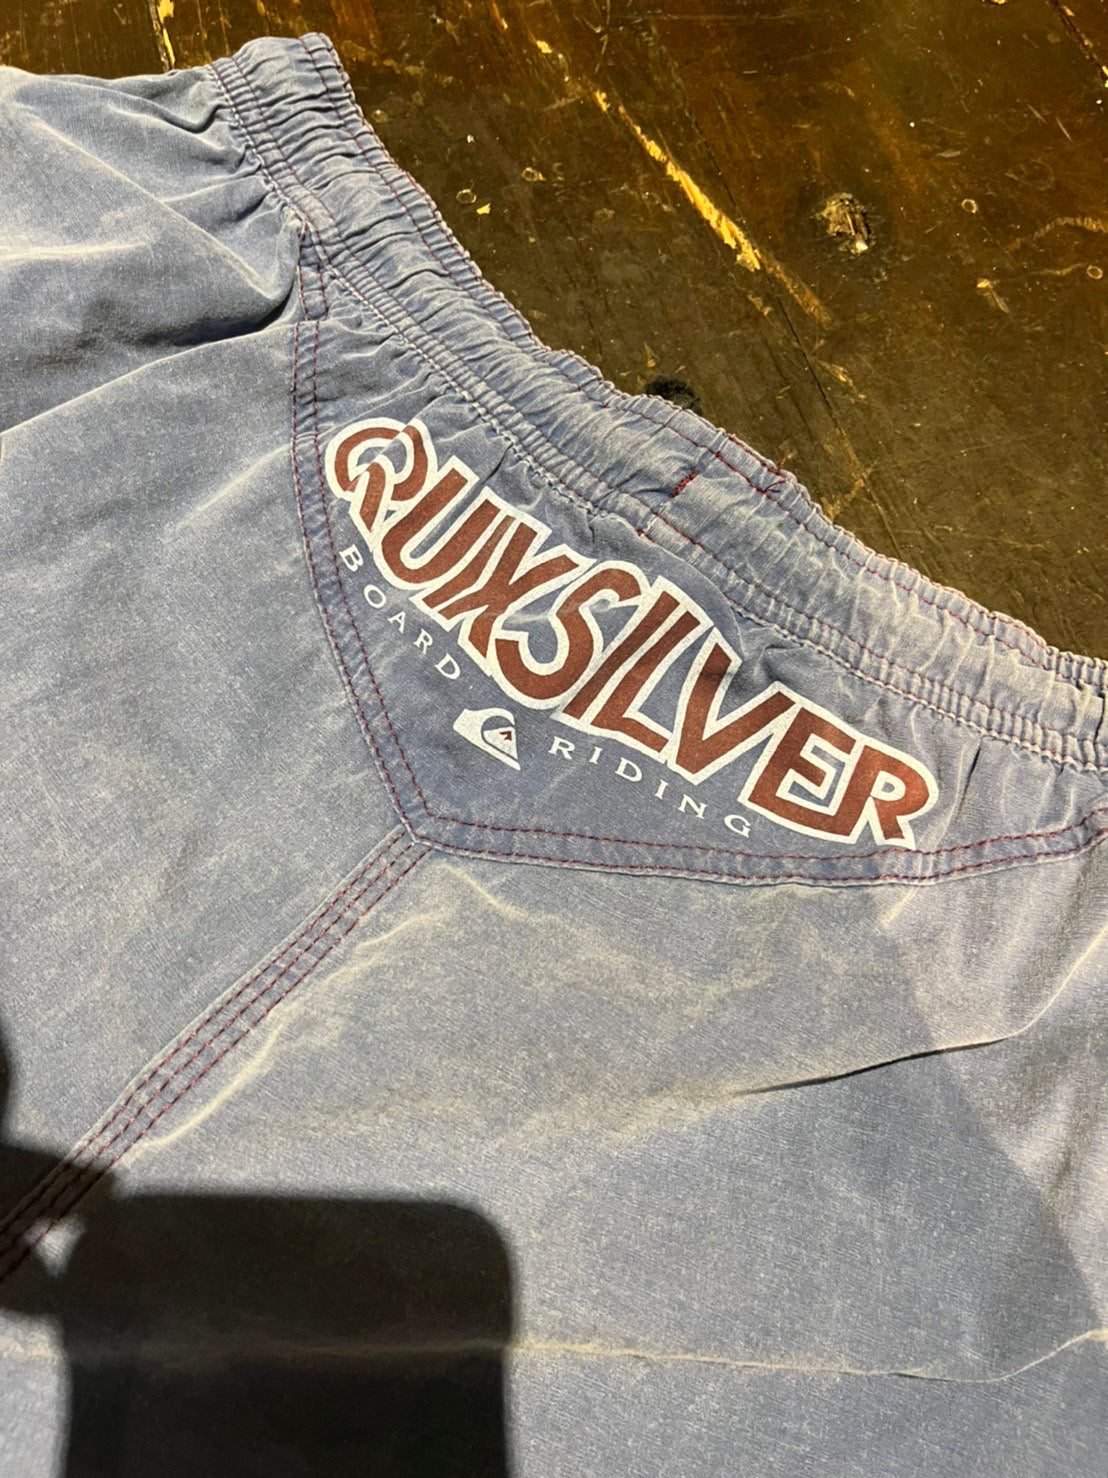 【Quiksilver 】Vtg 90s〜00s Quiksilver Cotton Shorts Rare Skate Surf Made in Australia (men's XL)